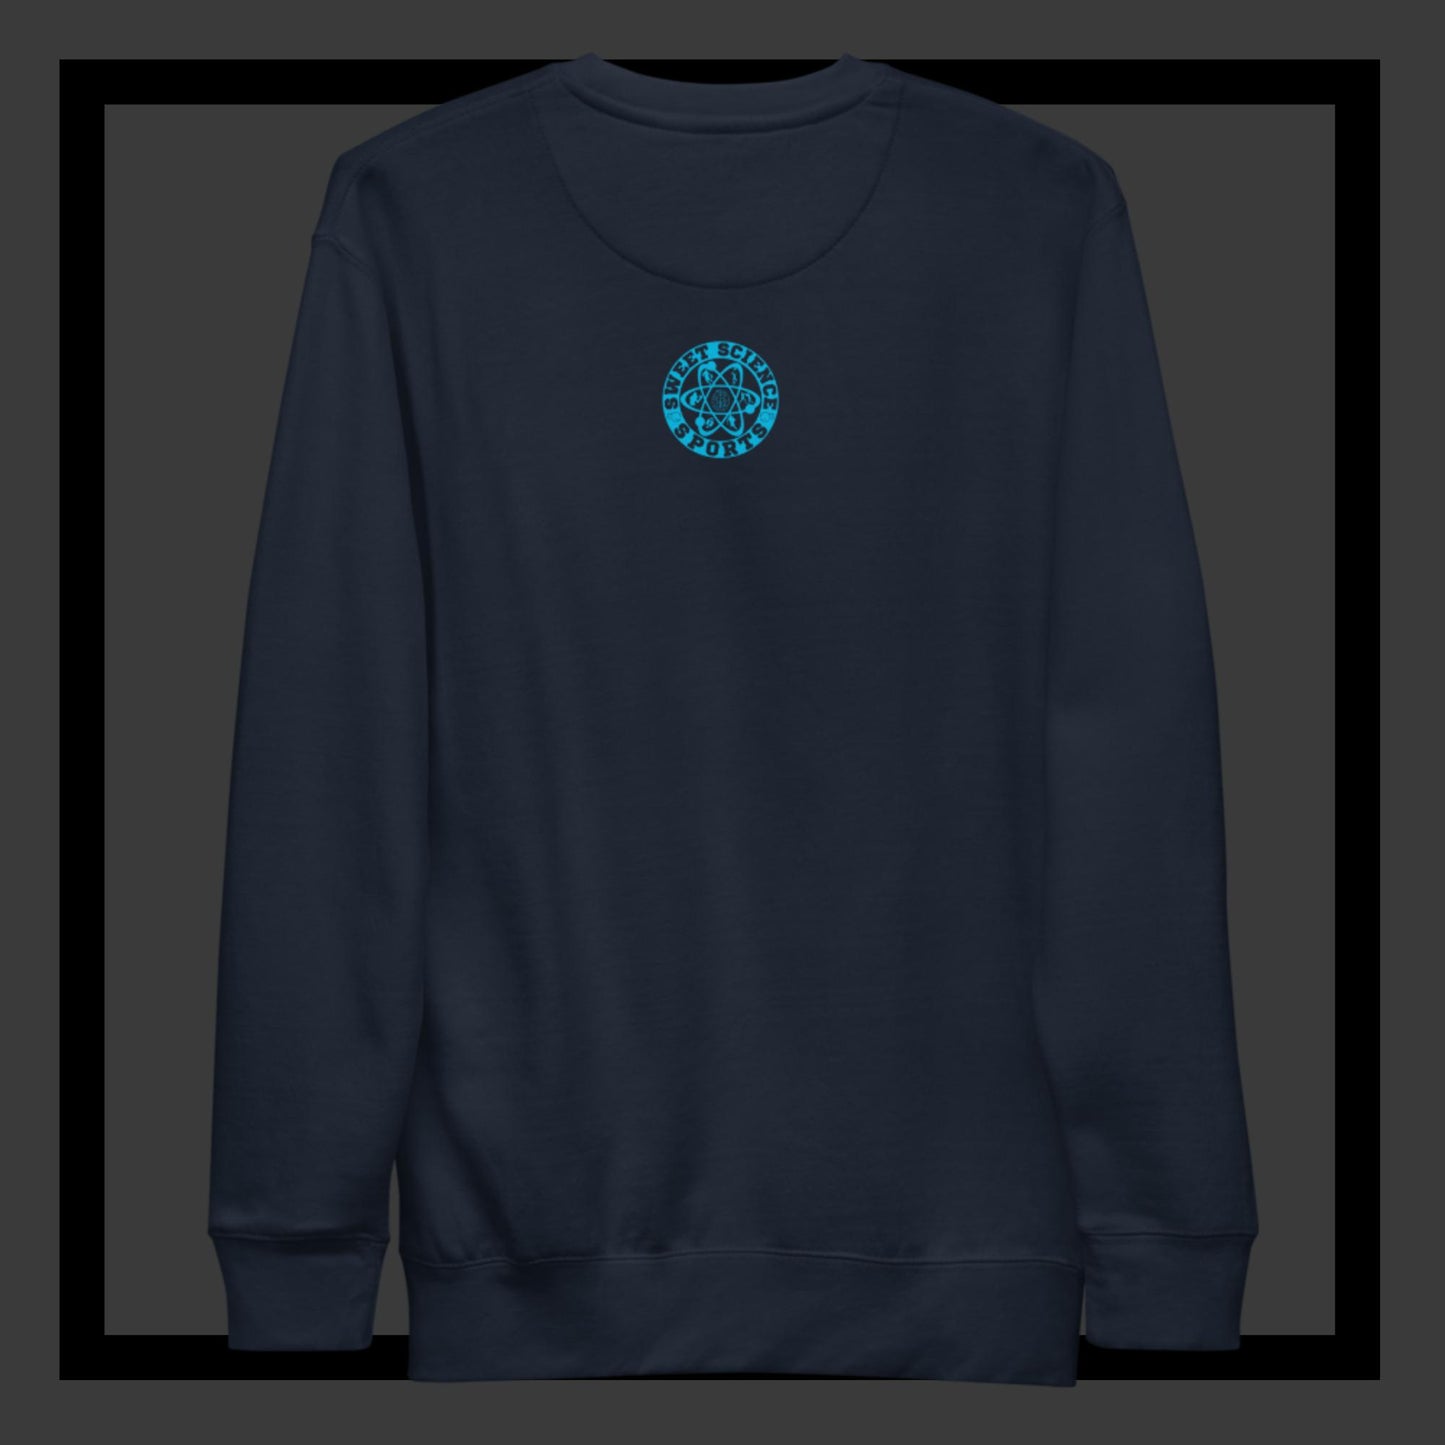 Sweet Science Sports South/Paw Orthodox  Sweatshirt